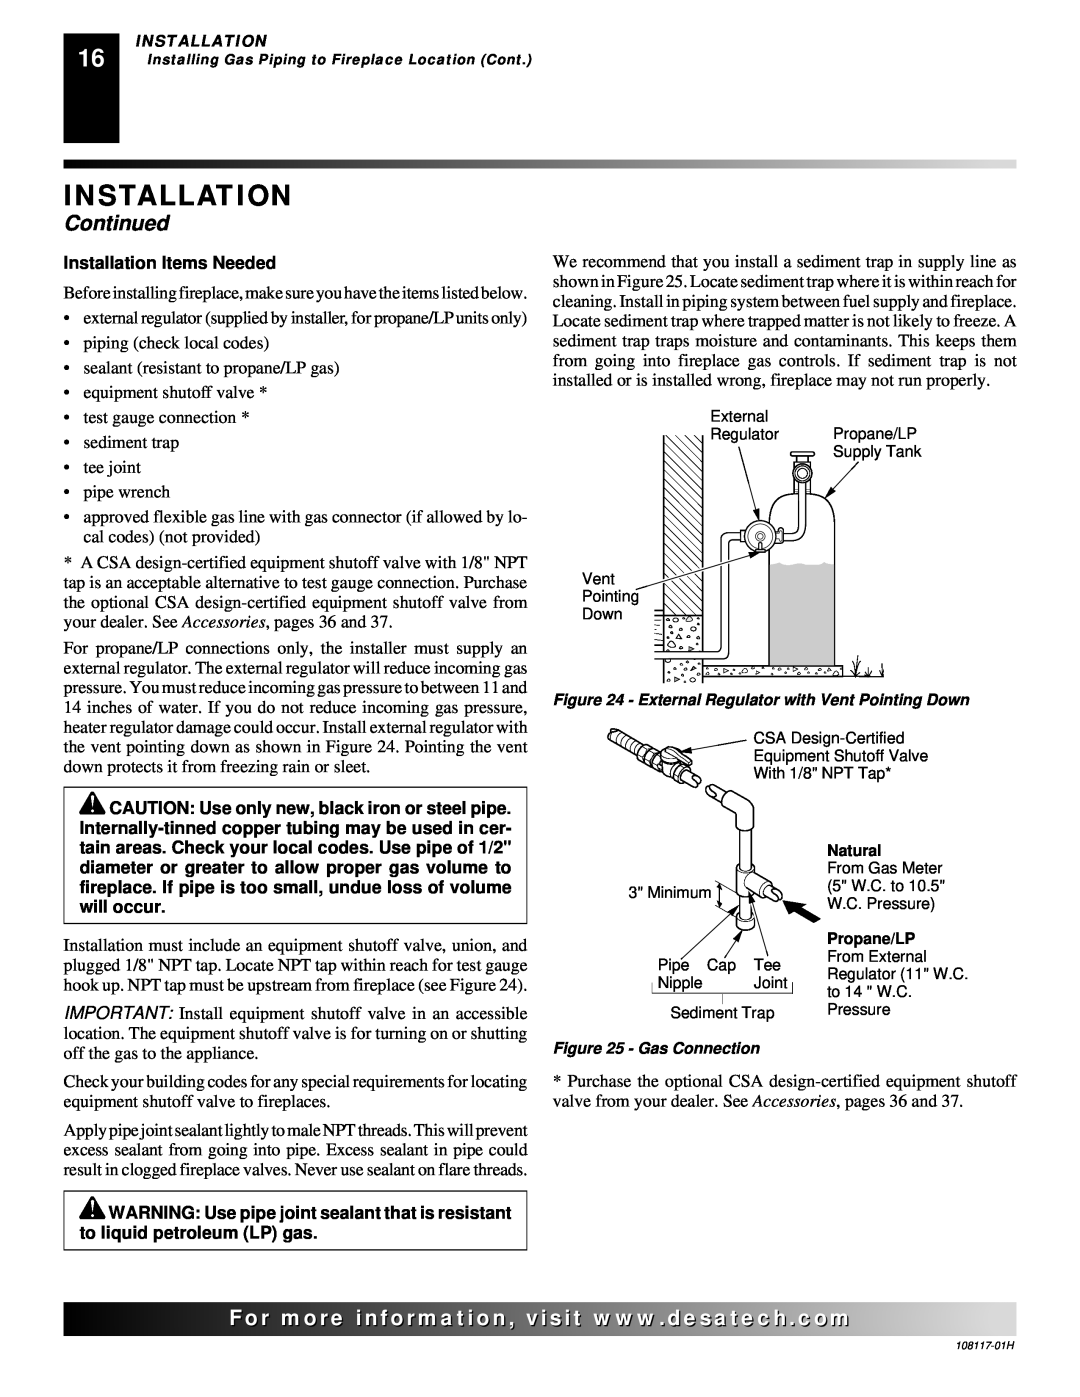 Desa EFP33NR, EFP33PR installation manual Continued, Installation Items Needed 